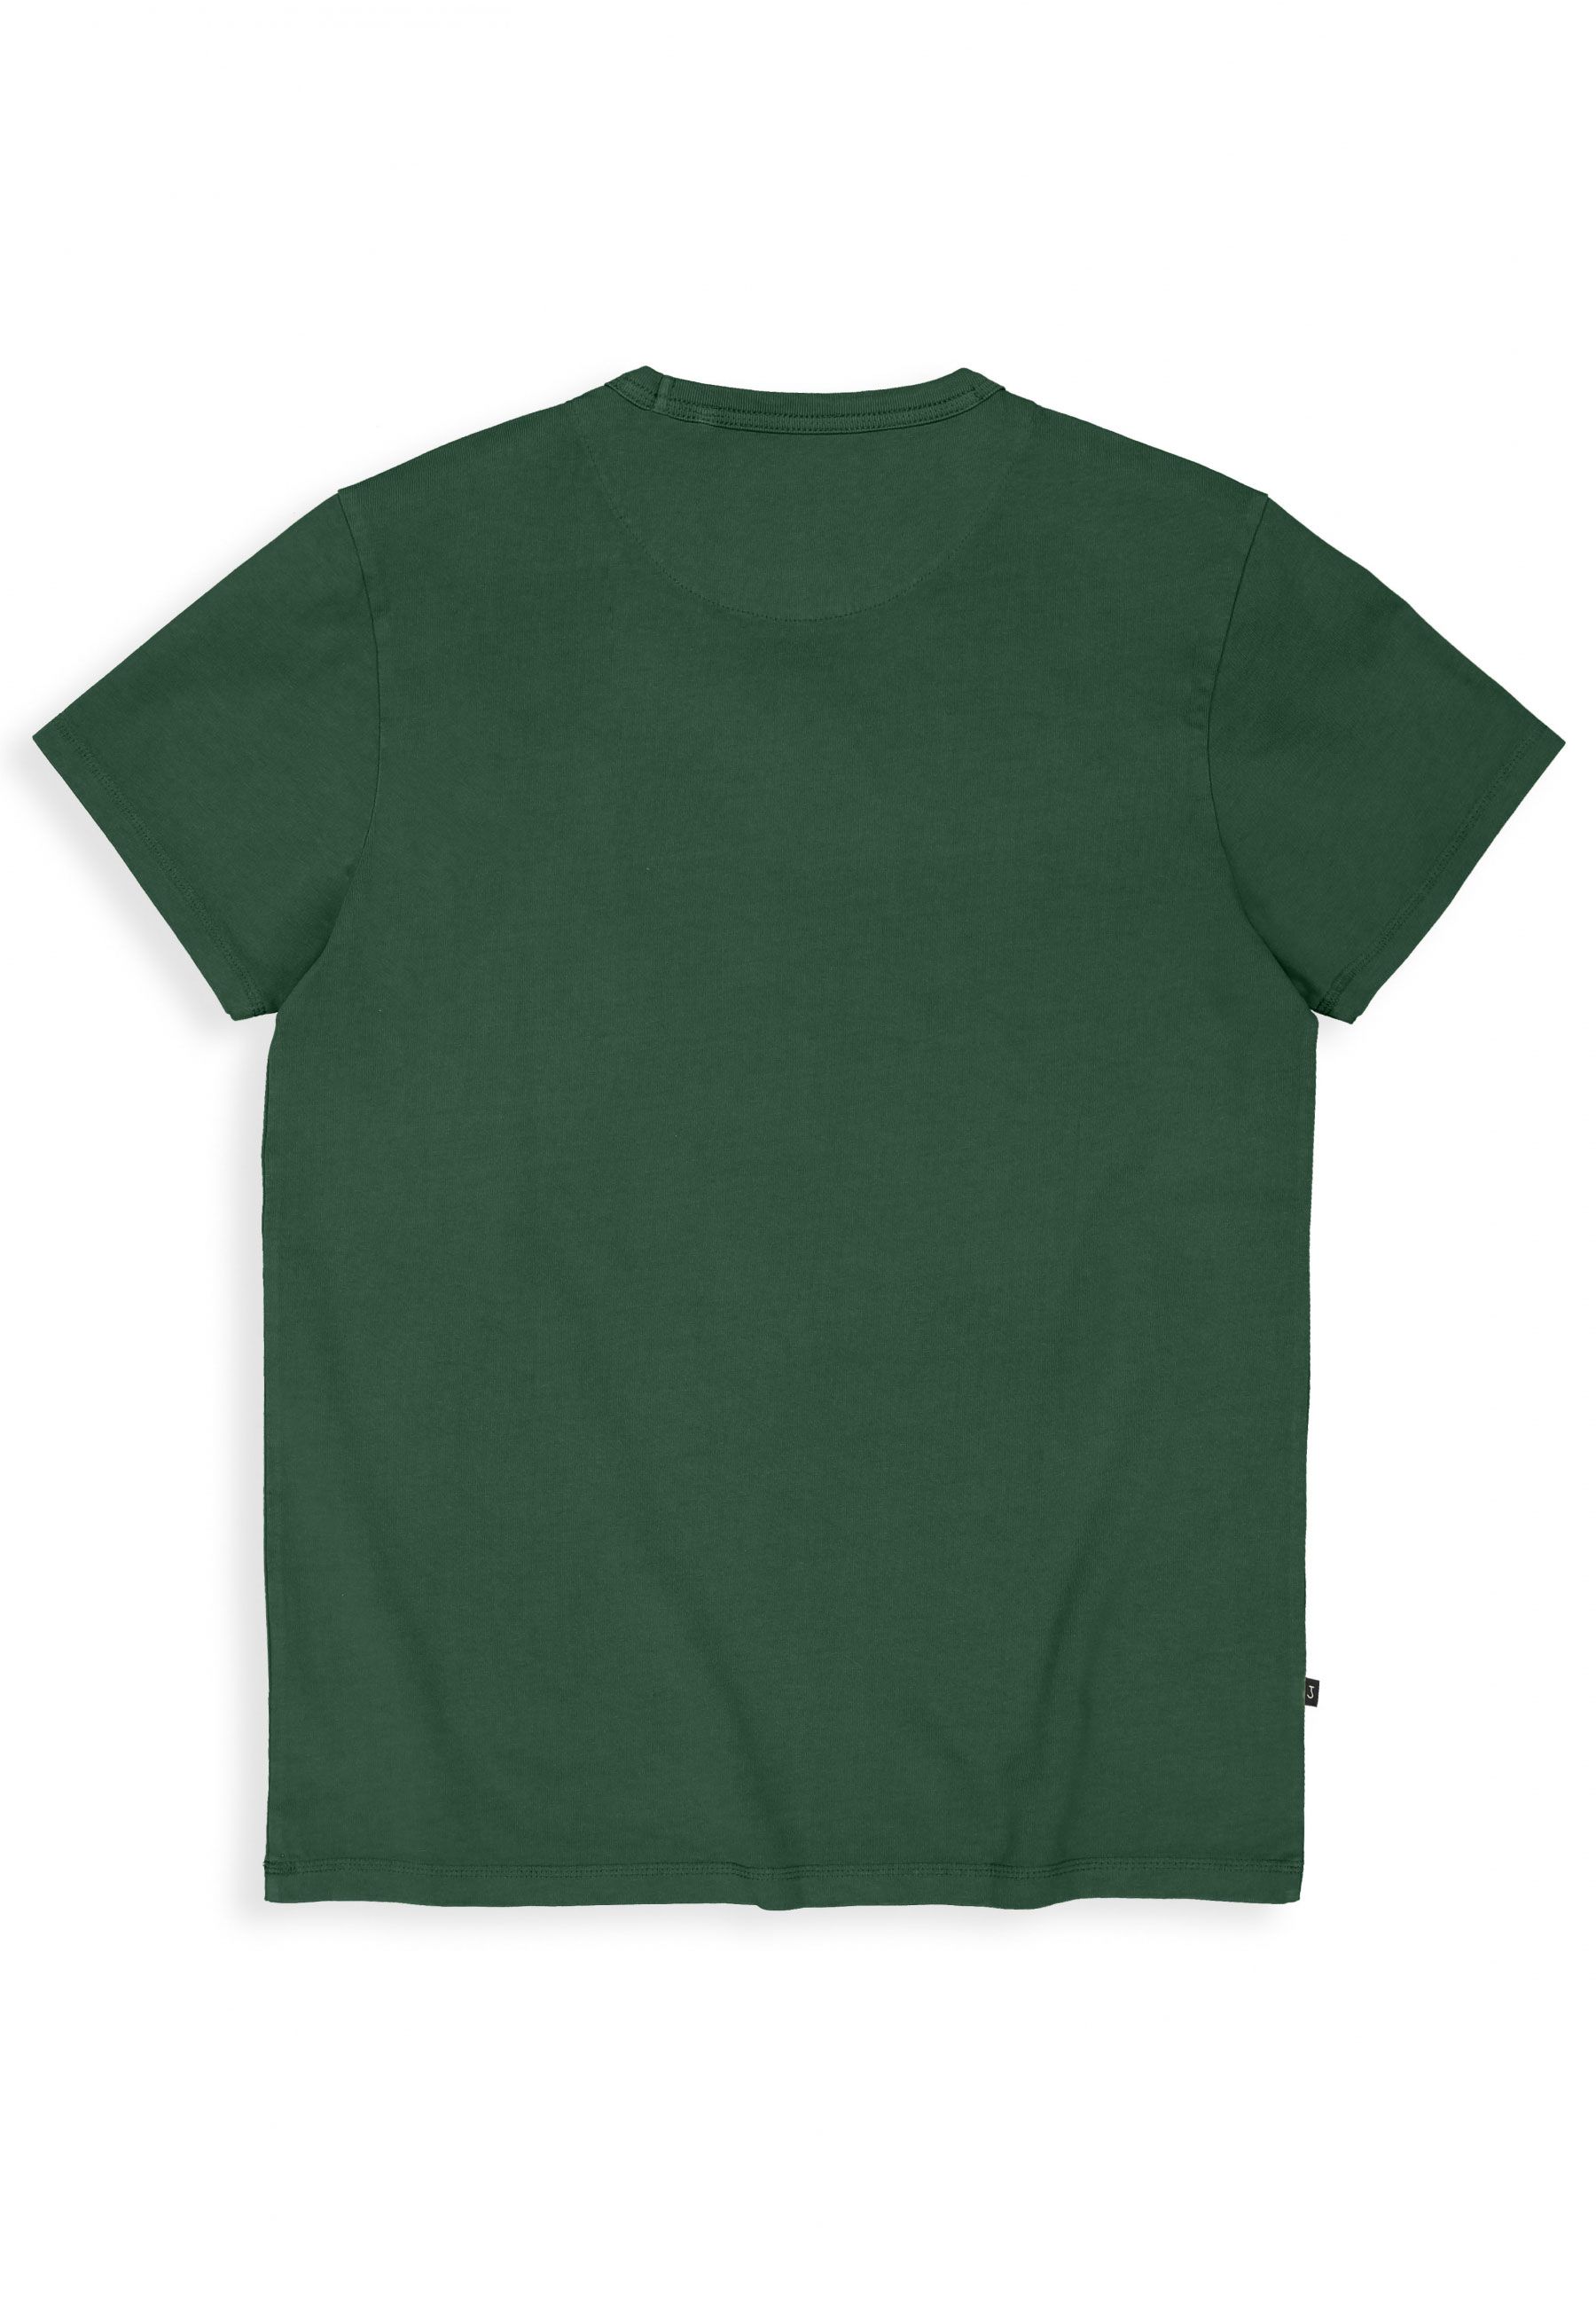 Army T-shirts Groen 2012001